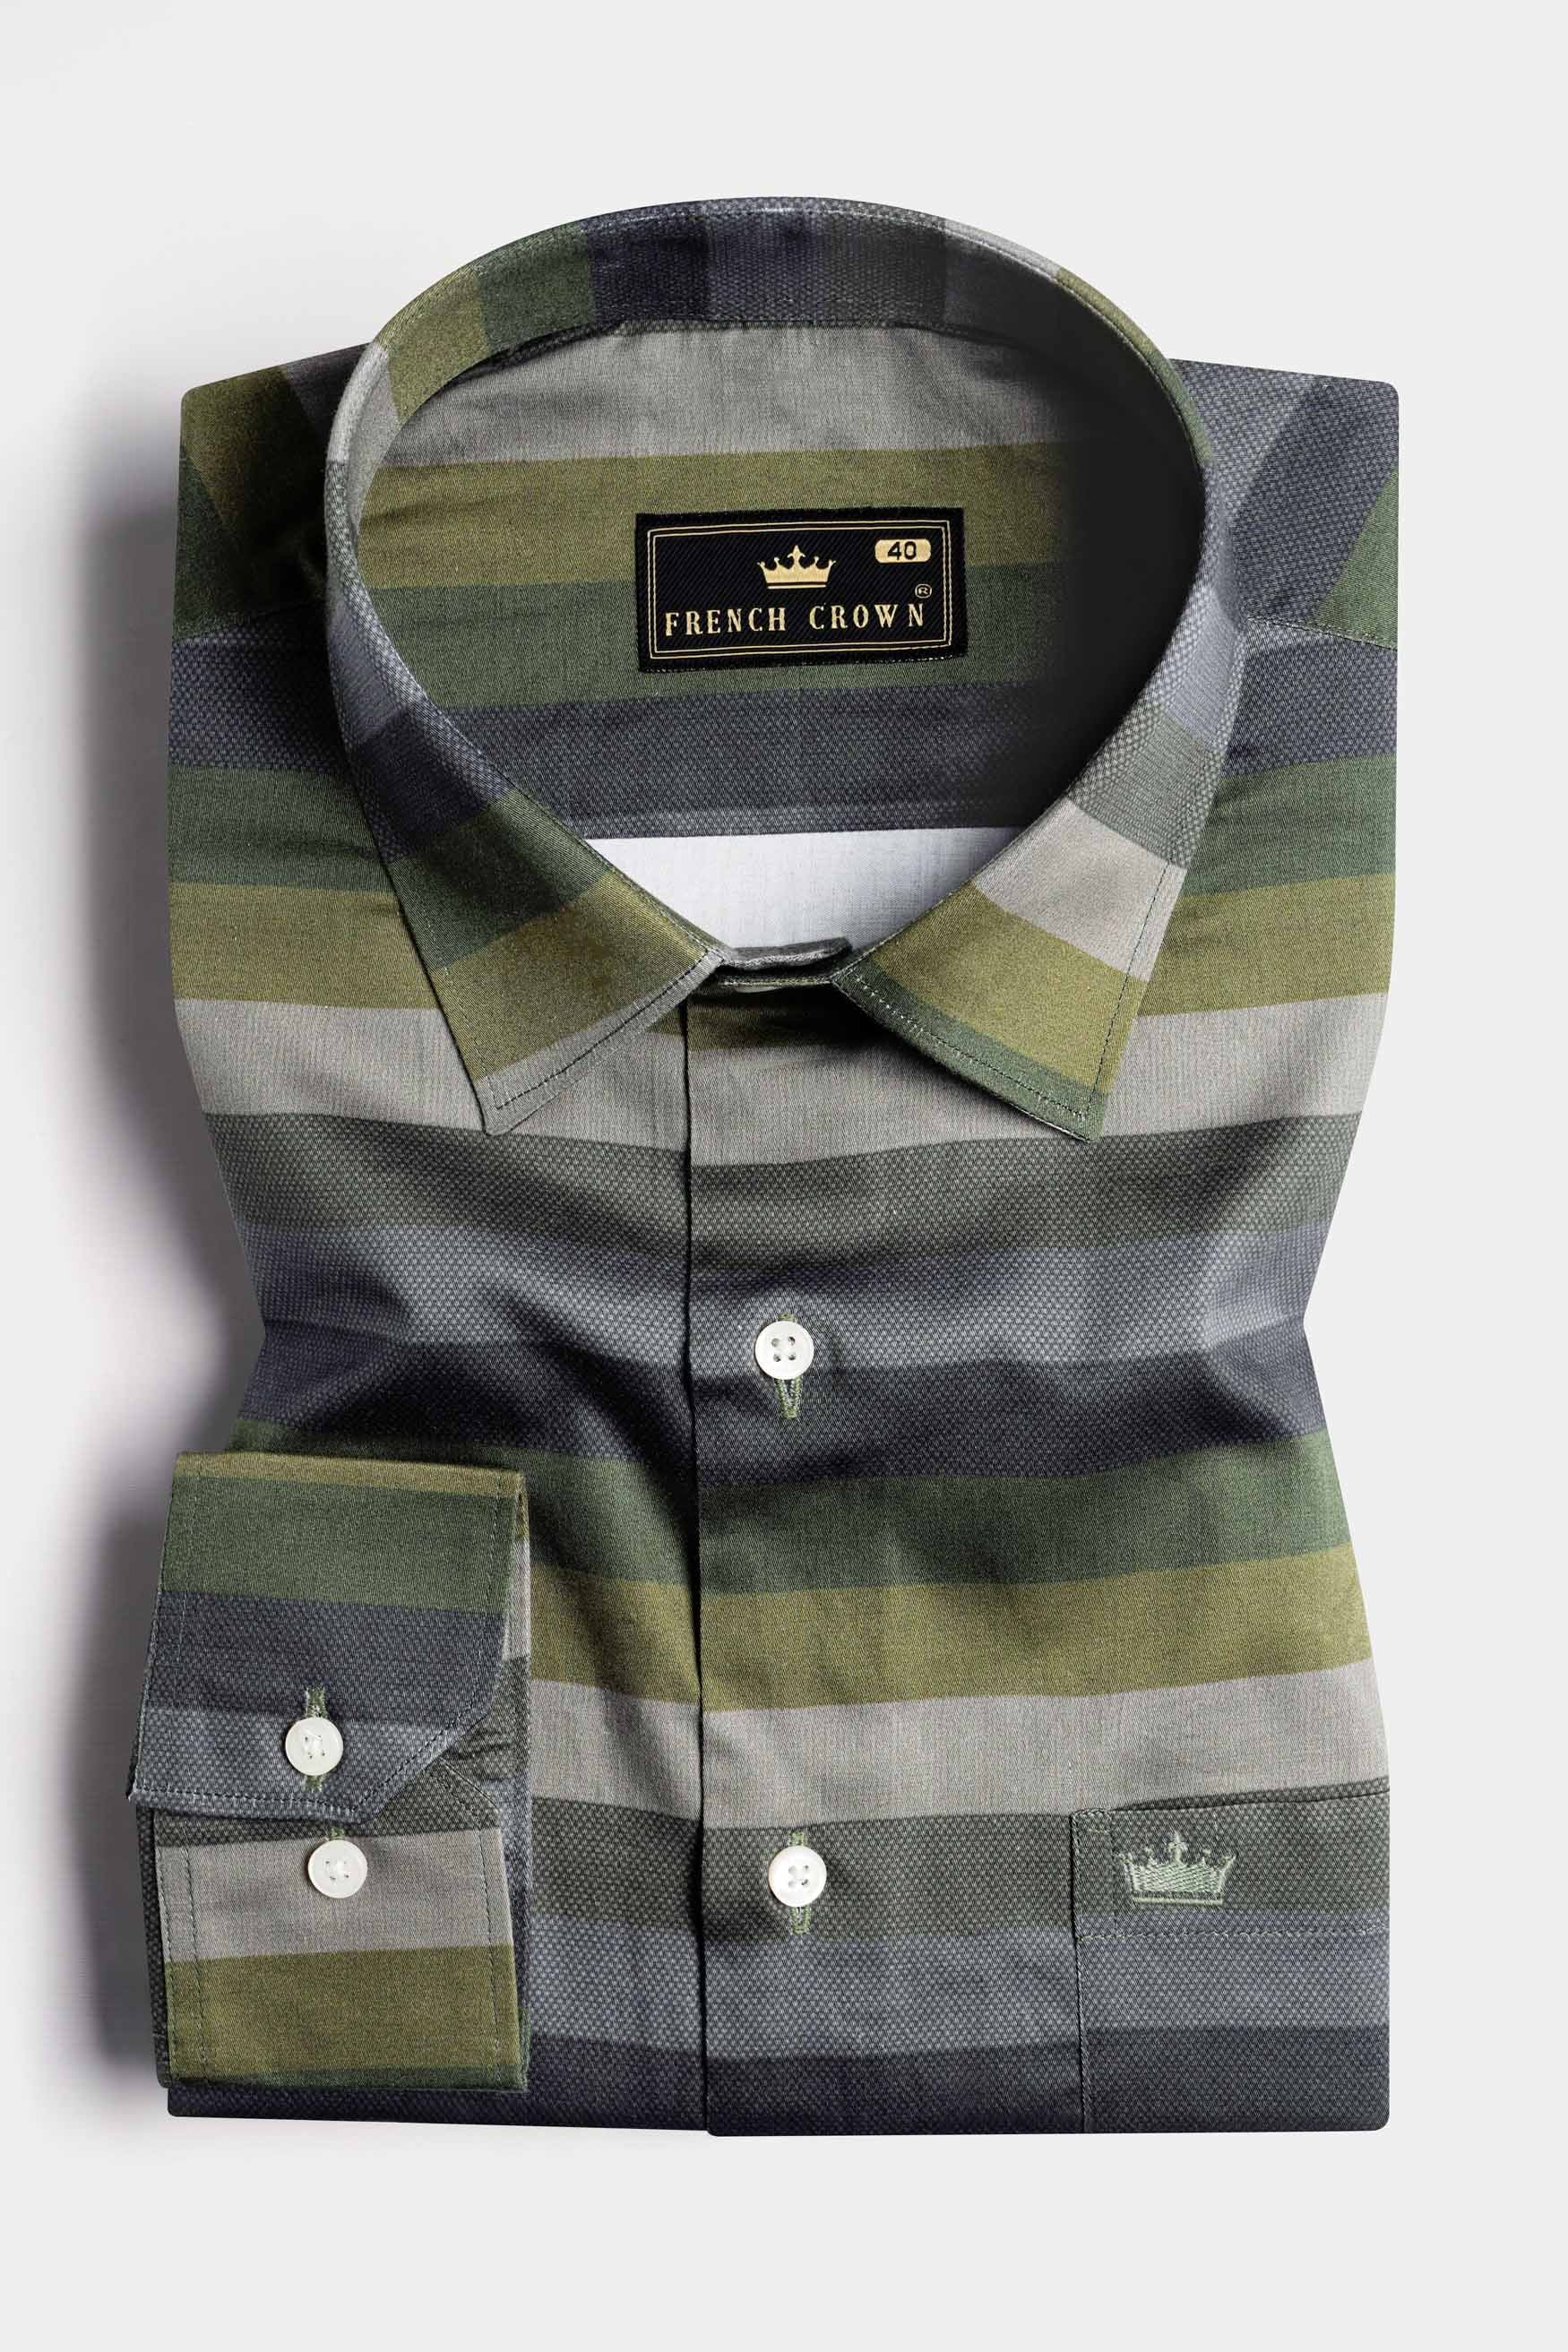 Tuatara Green and Oslo Gray Multicolour Subtle Sheen Super Soft Premium Cotton Shirt